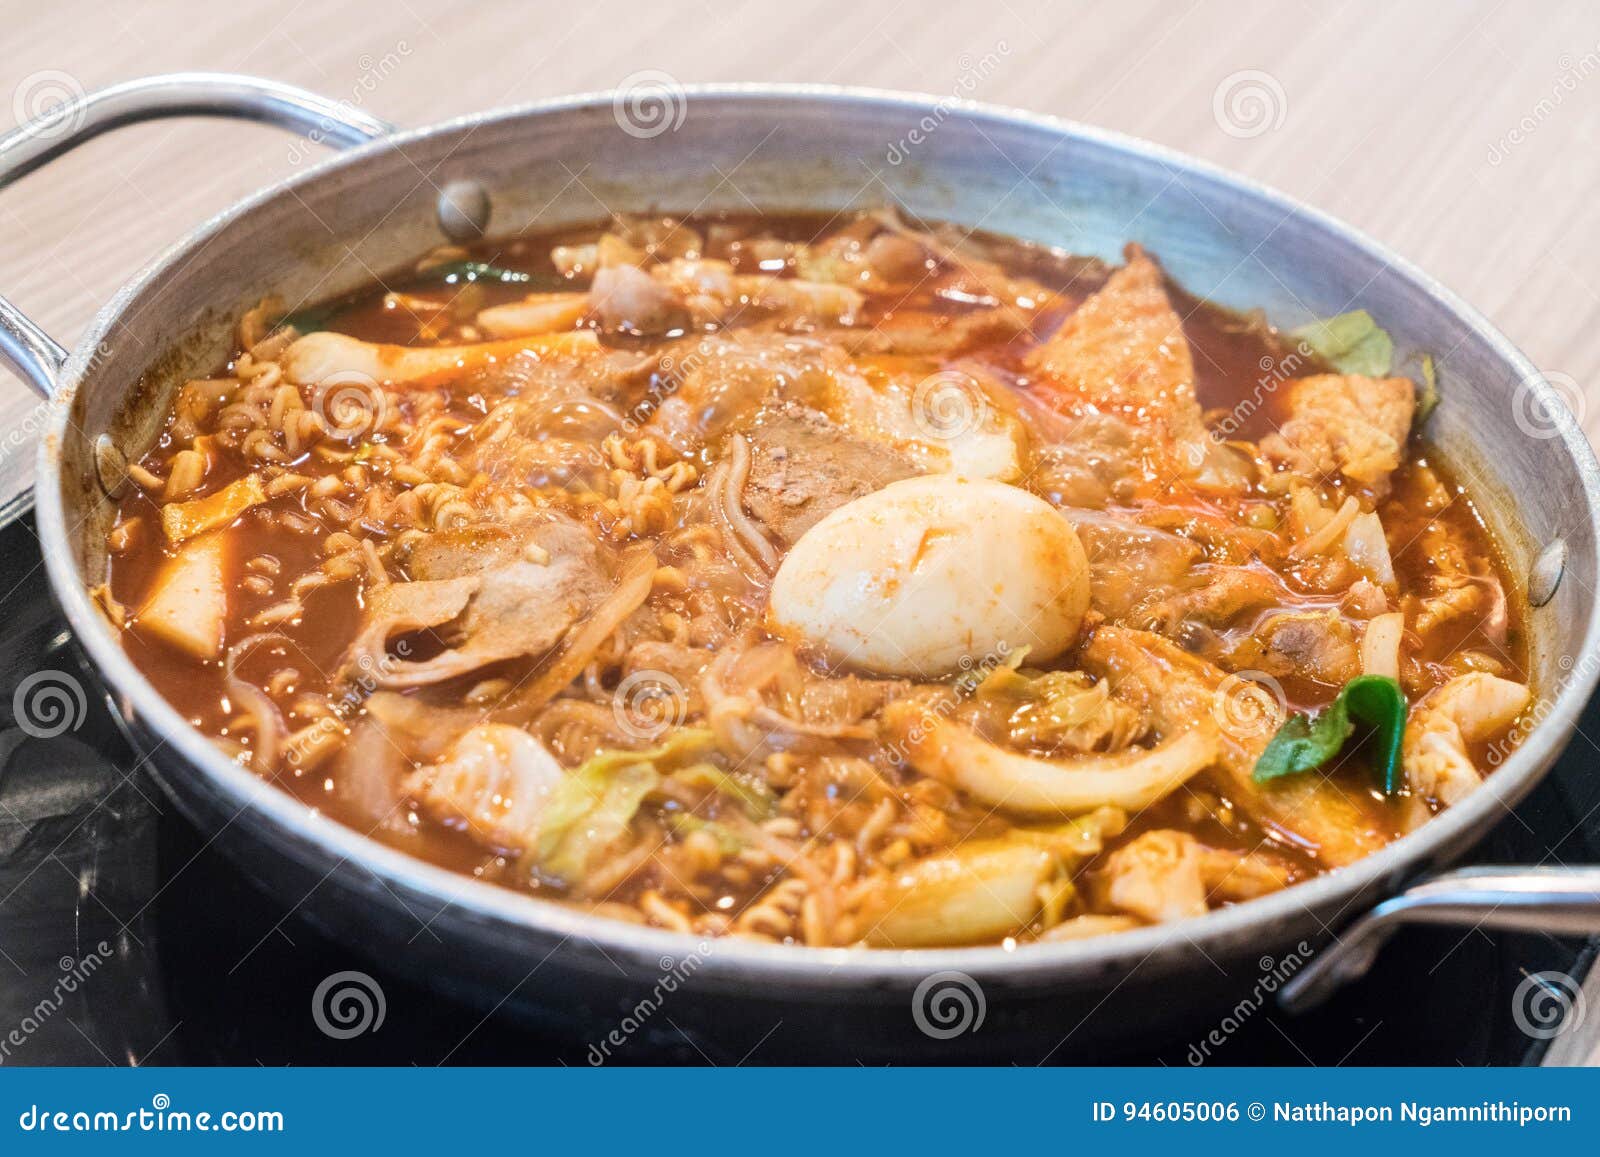 Tokpokki - Traditional Korean Food, Hot Pot Style. Stock Photo - Image ...